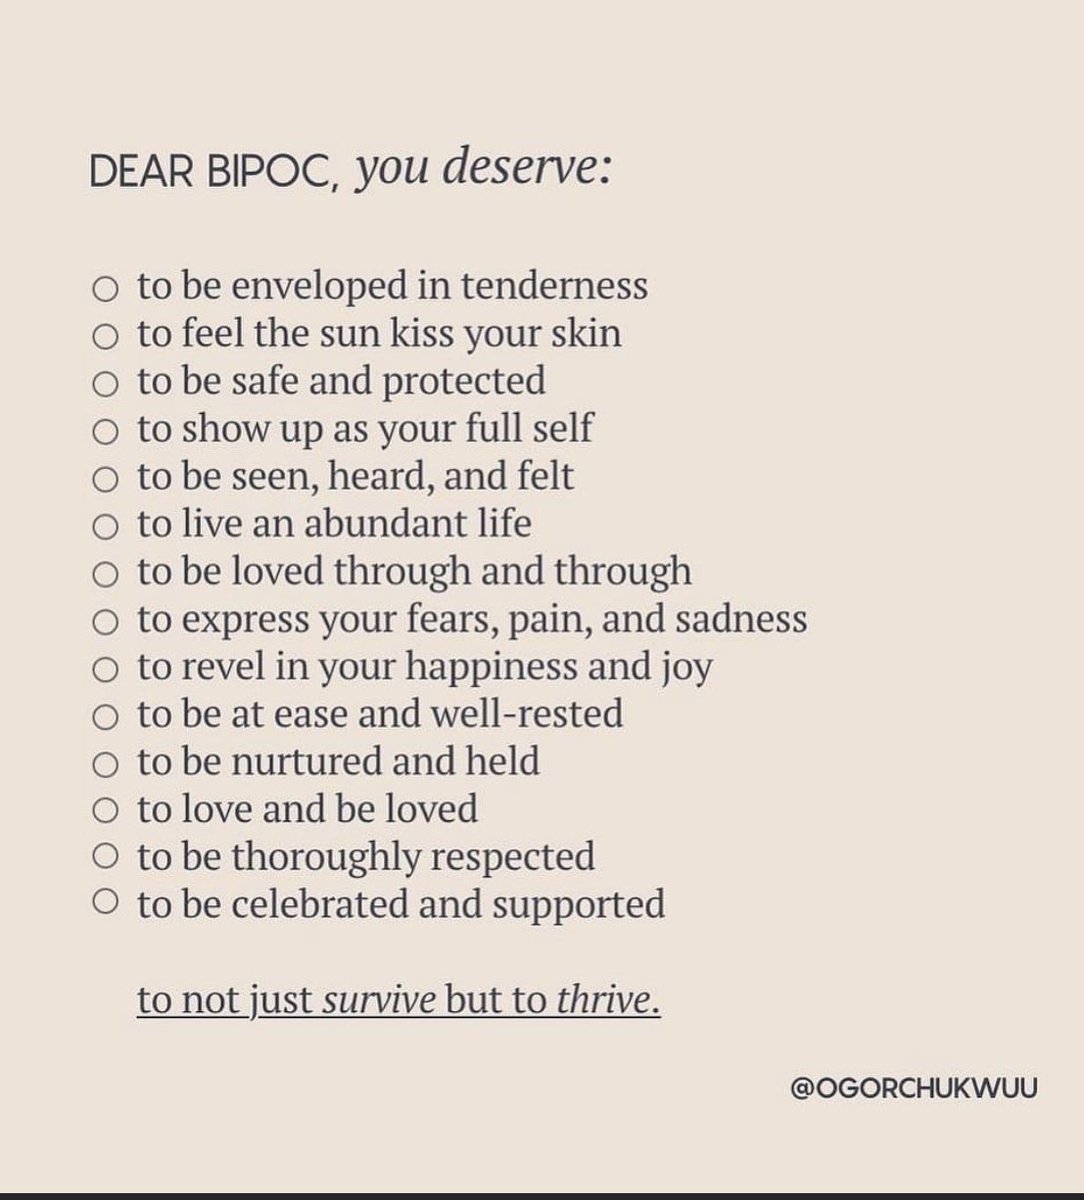 Dear BIPOC, you deserve...